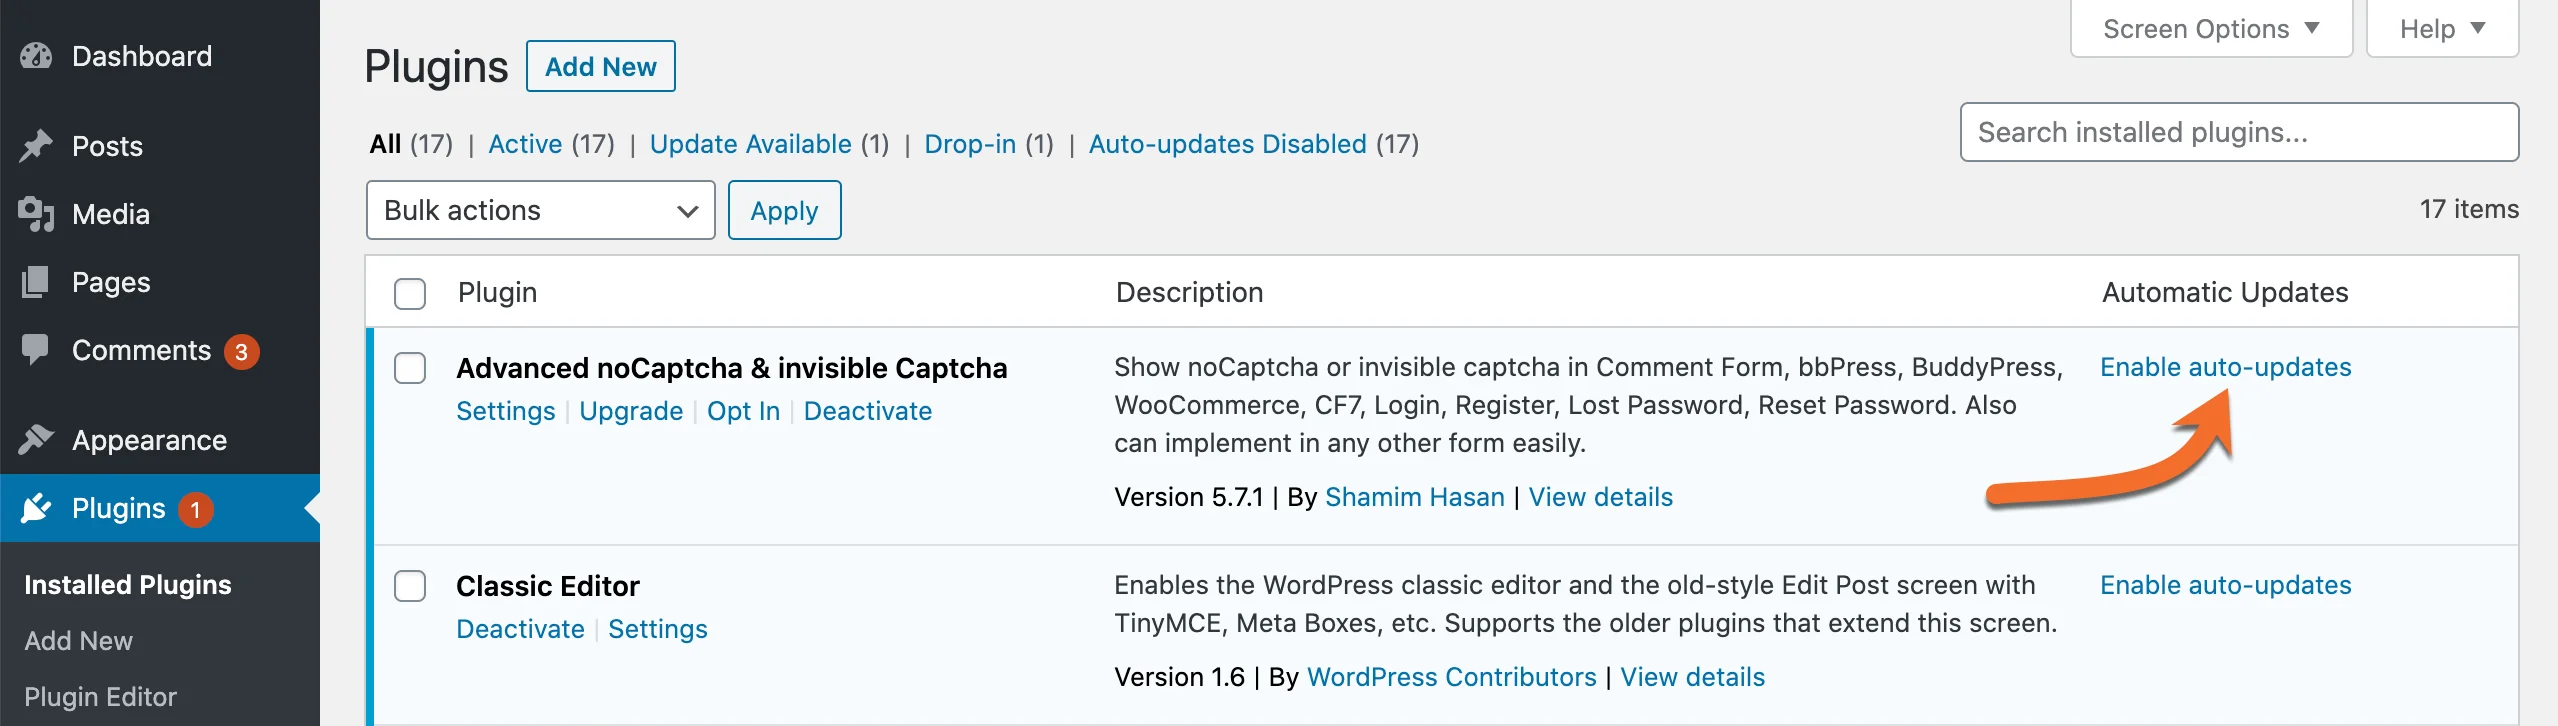 WordPress Dashboard Plugins Enable auto updates